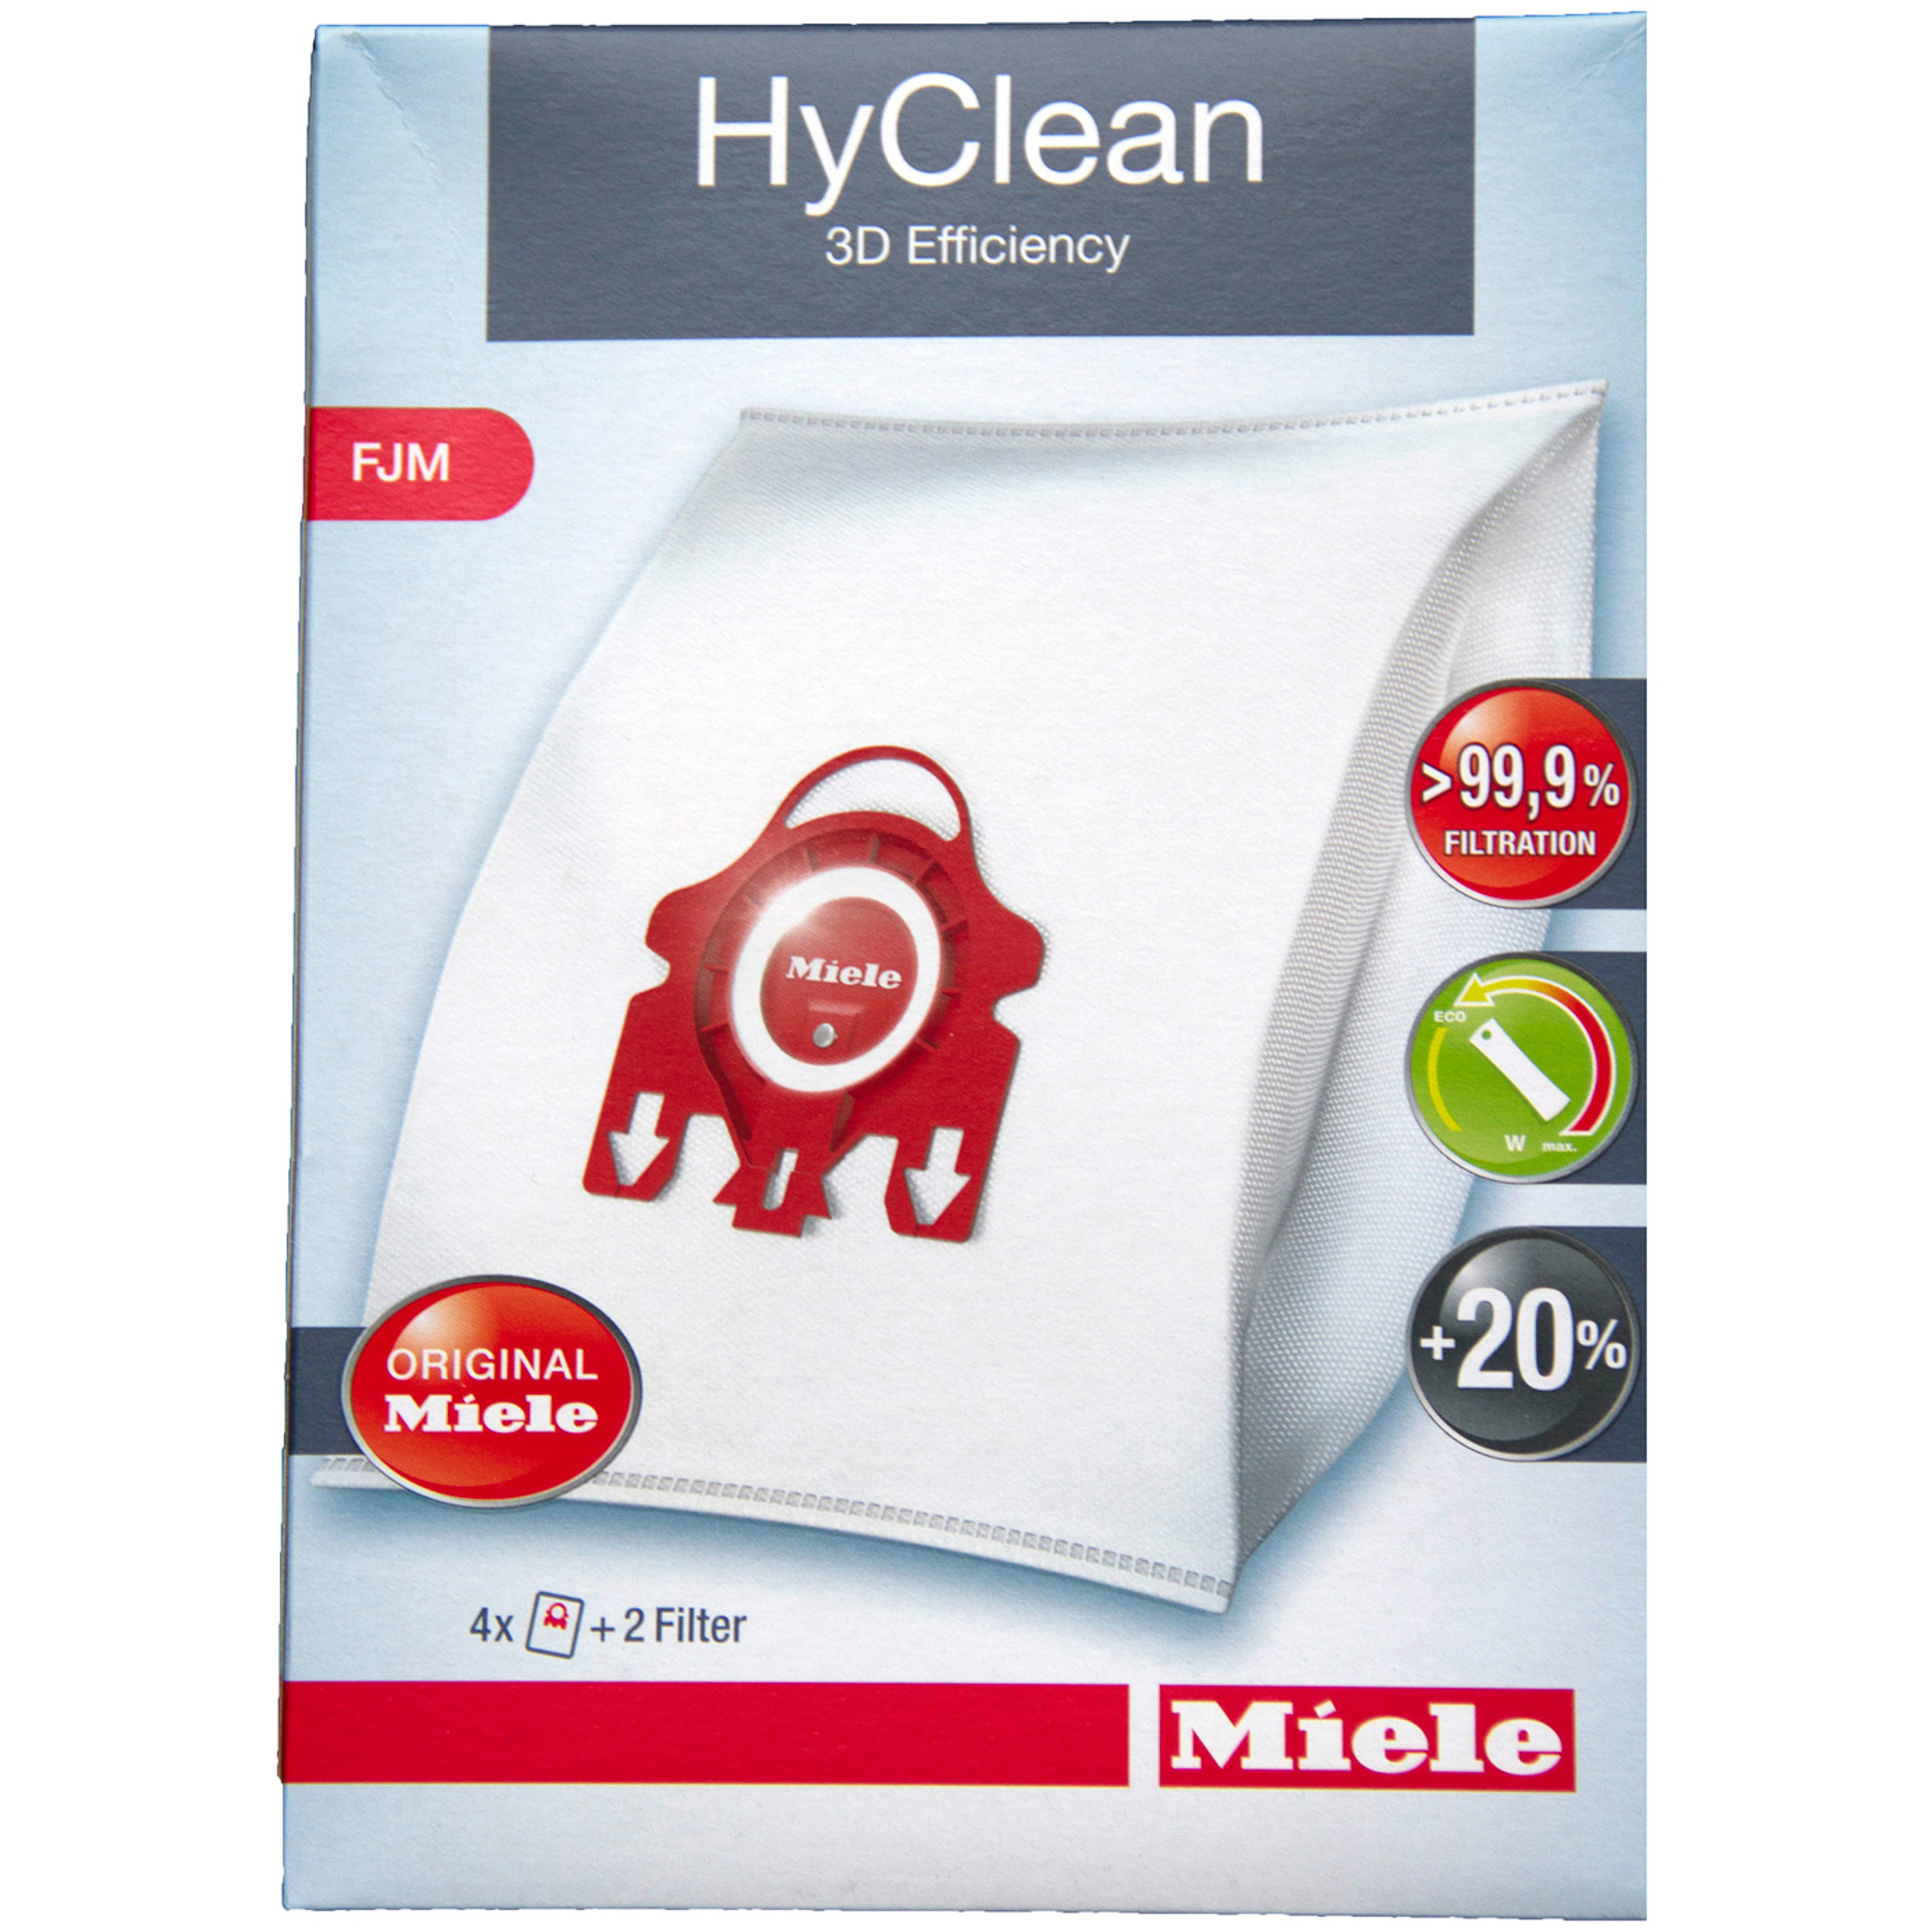 Пылесборник Miele FJM HyClean 3D Efficiency комплект пылесборников miele allergy xl pack 2 hyclean fjm фильтр ha50